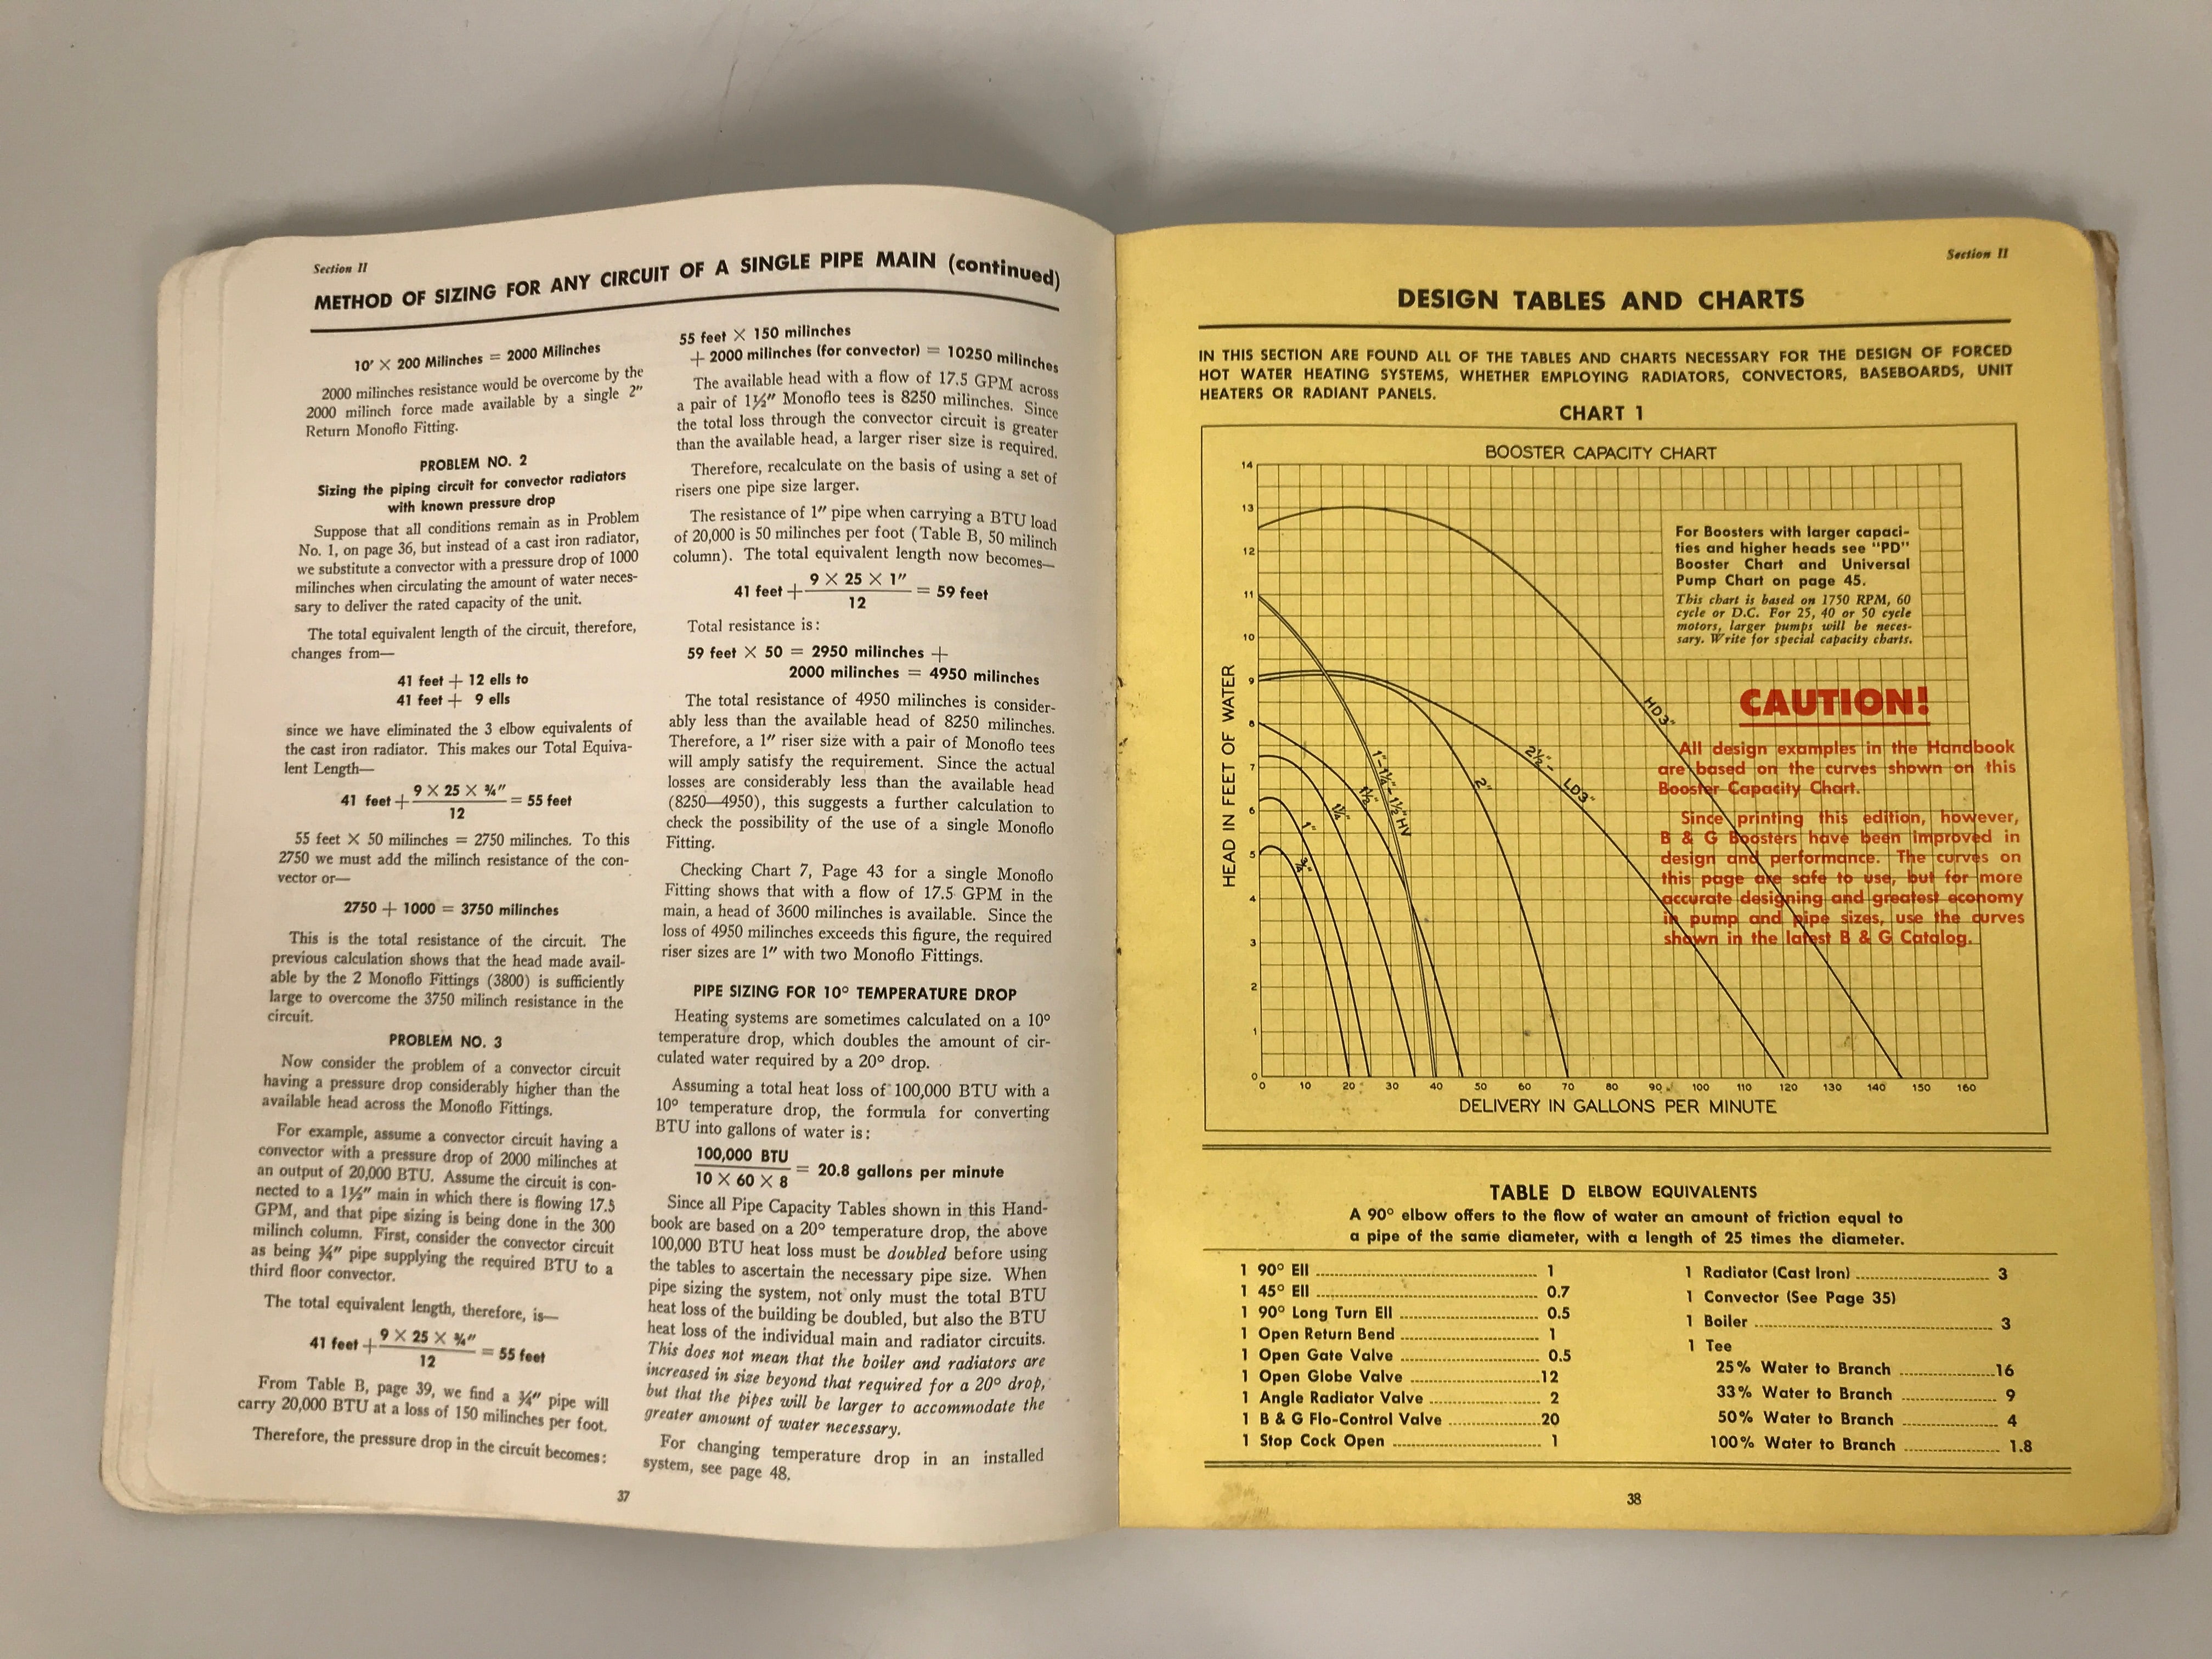 The Bell & Gossett Handbook 1949 Second Edition Bell & Gossett Company SC